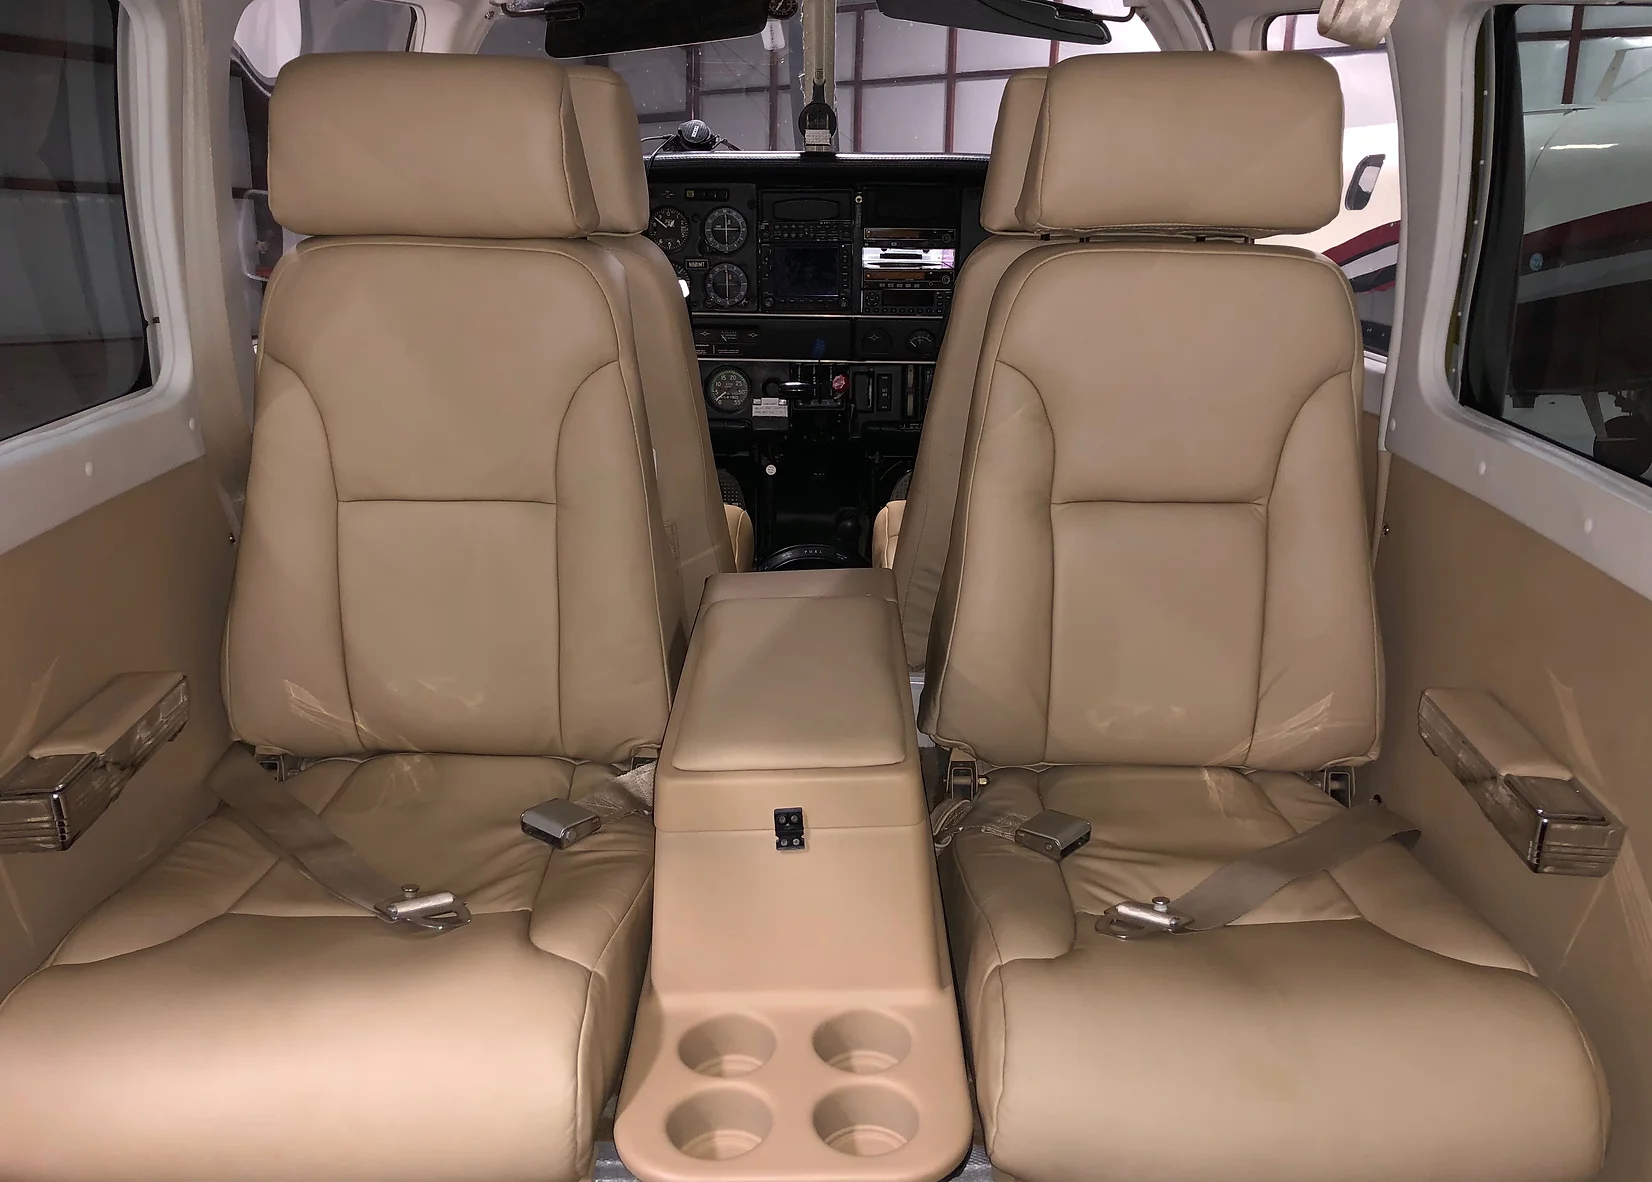 Piper Saratoga Interior Cockpit | Griffing Private Air Charter Plane Flying Service in Port Clinton Ohio